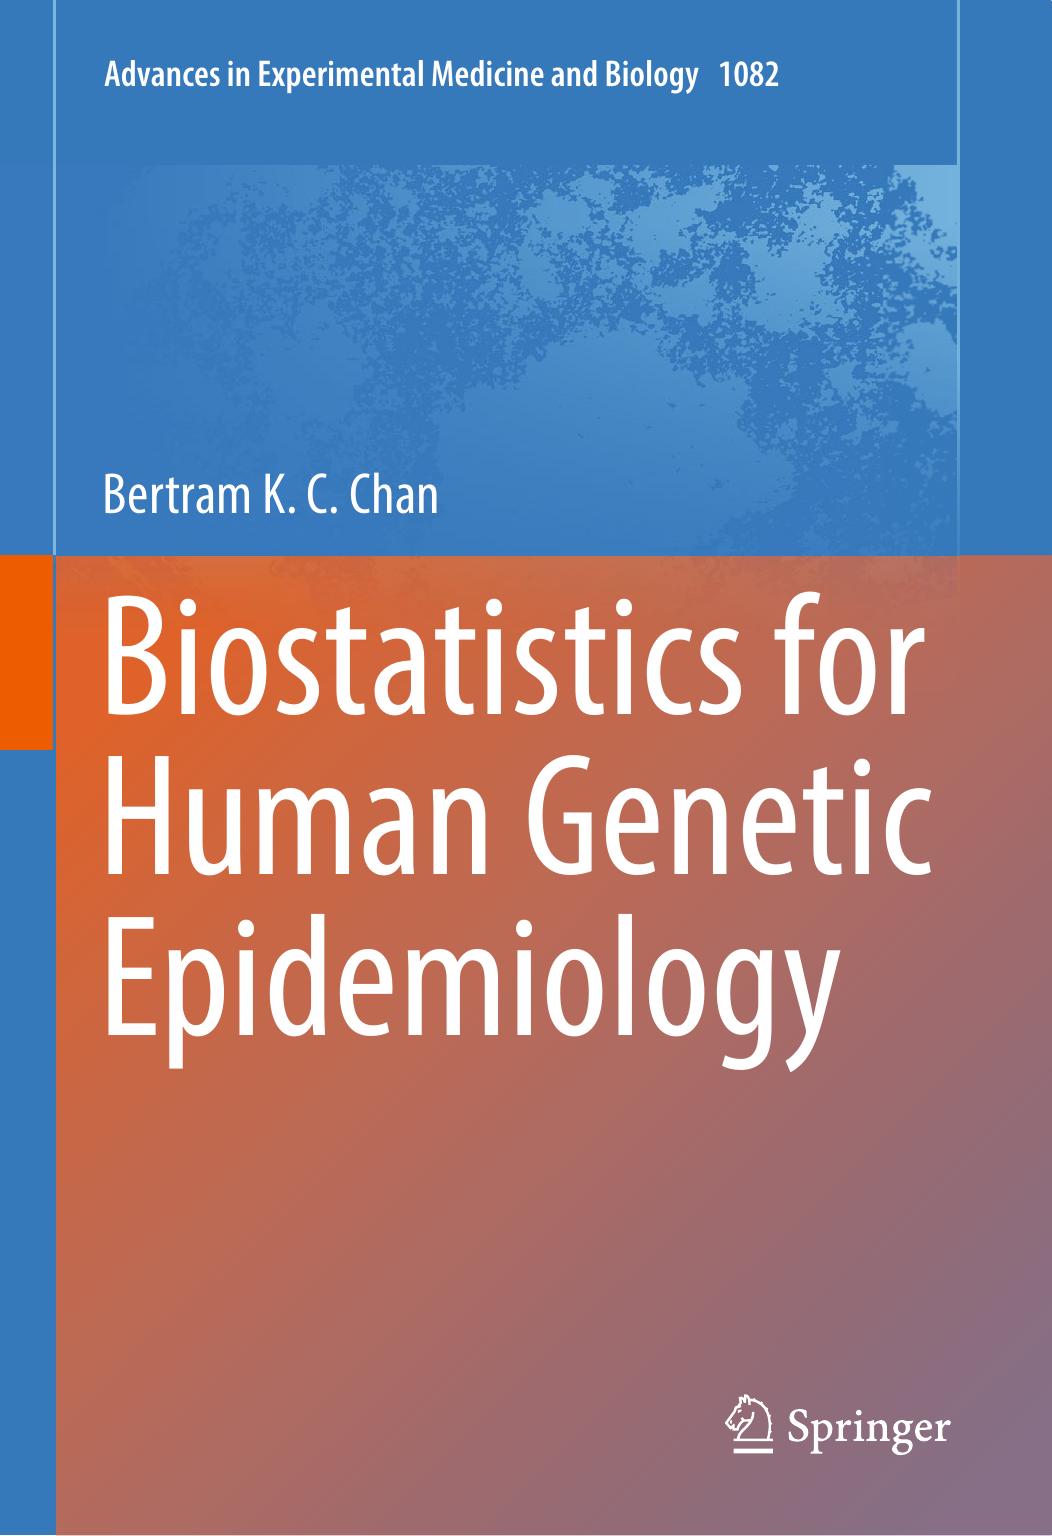 Biostatistics for Human Genetic Epidemiology Vol.1082. 2018.pdf